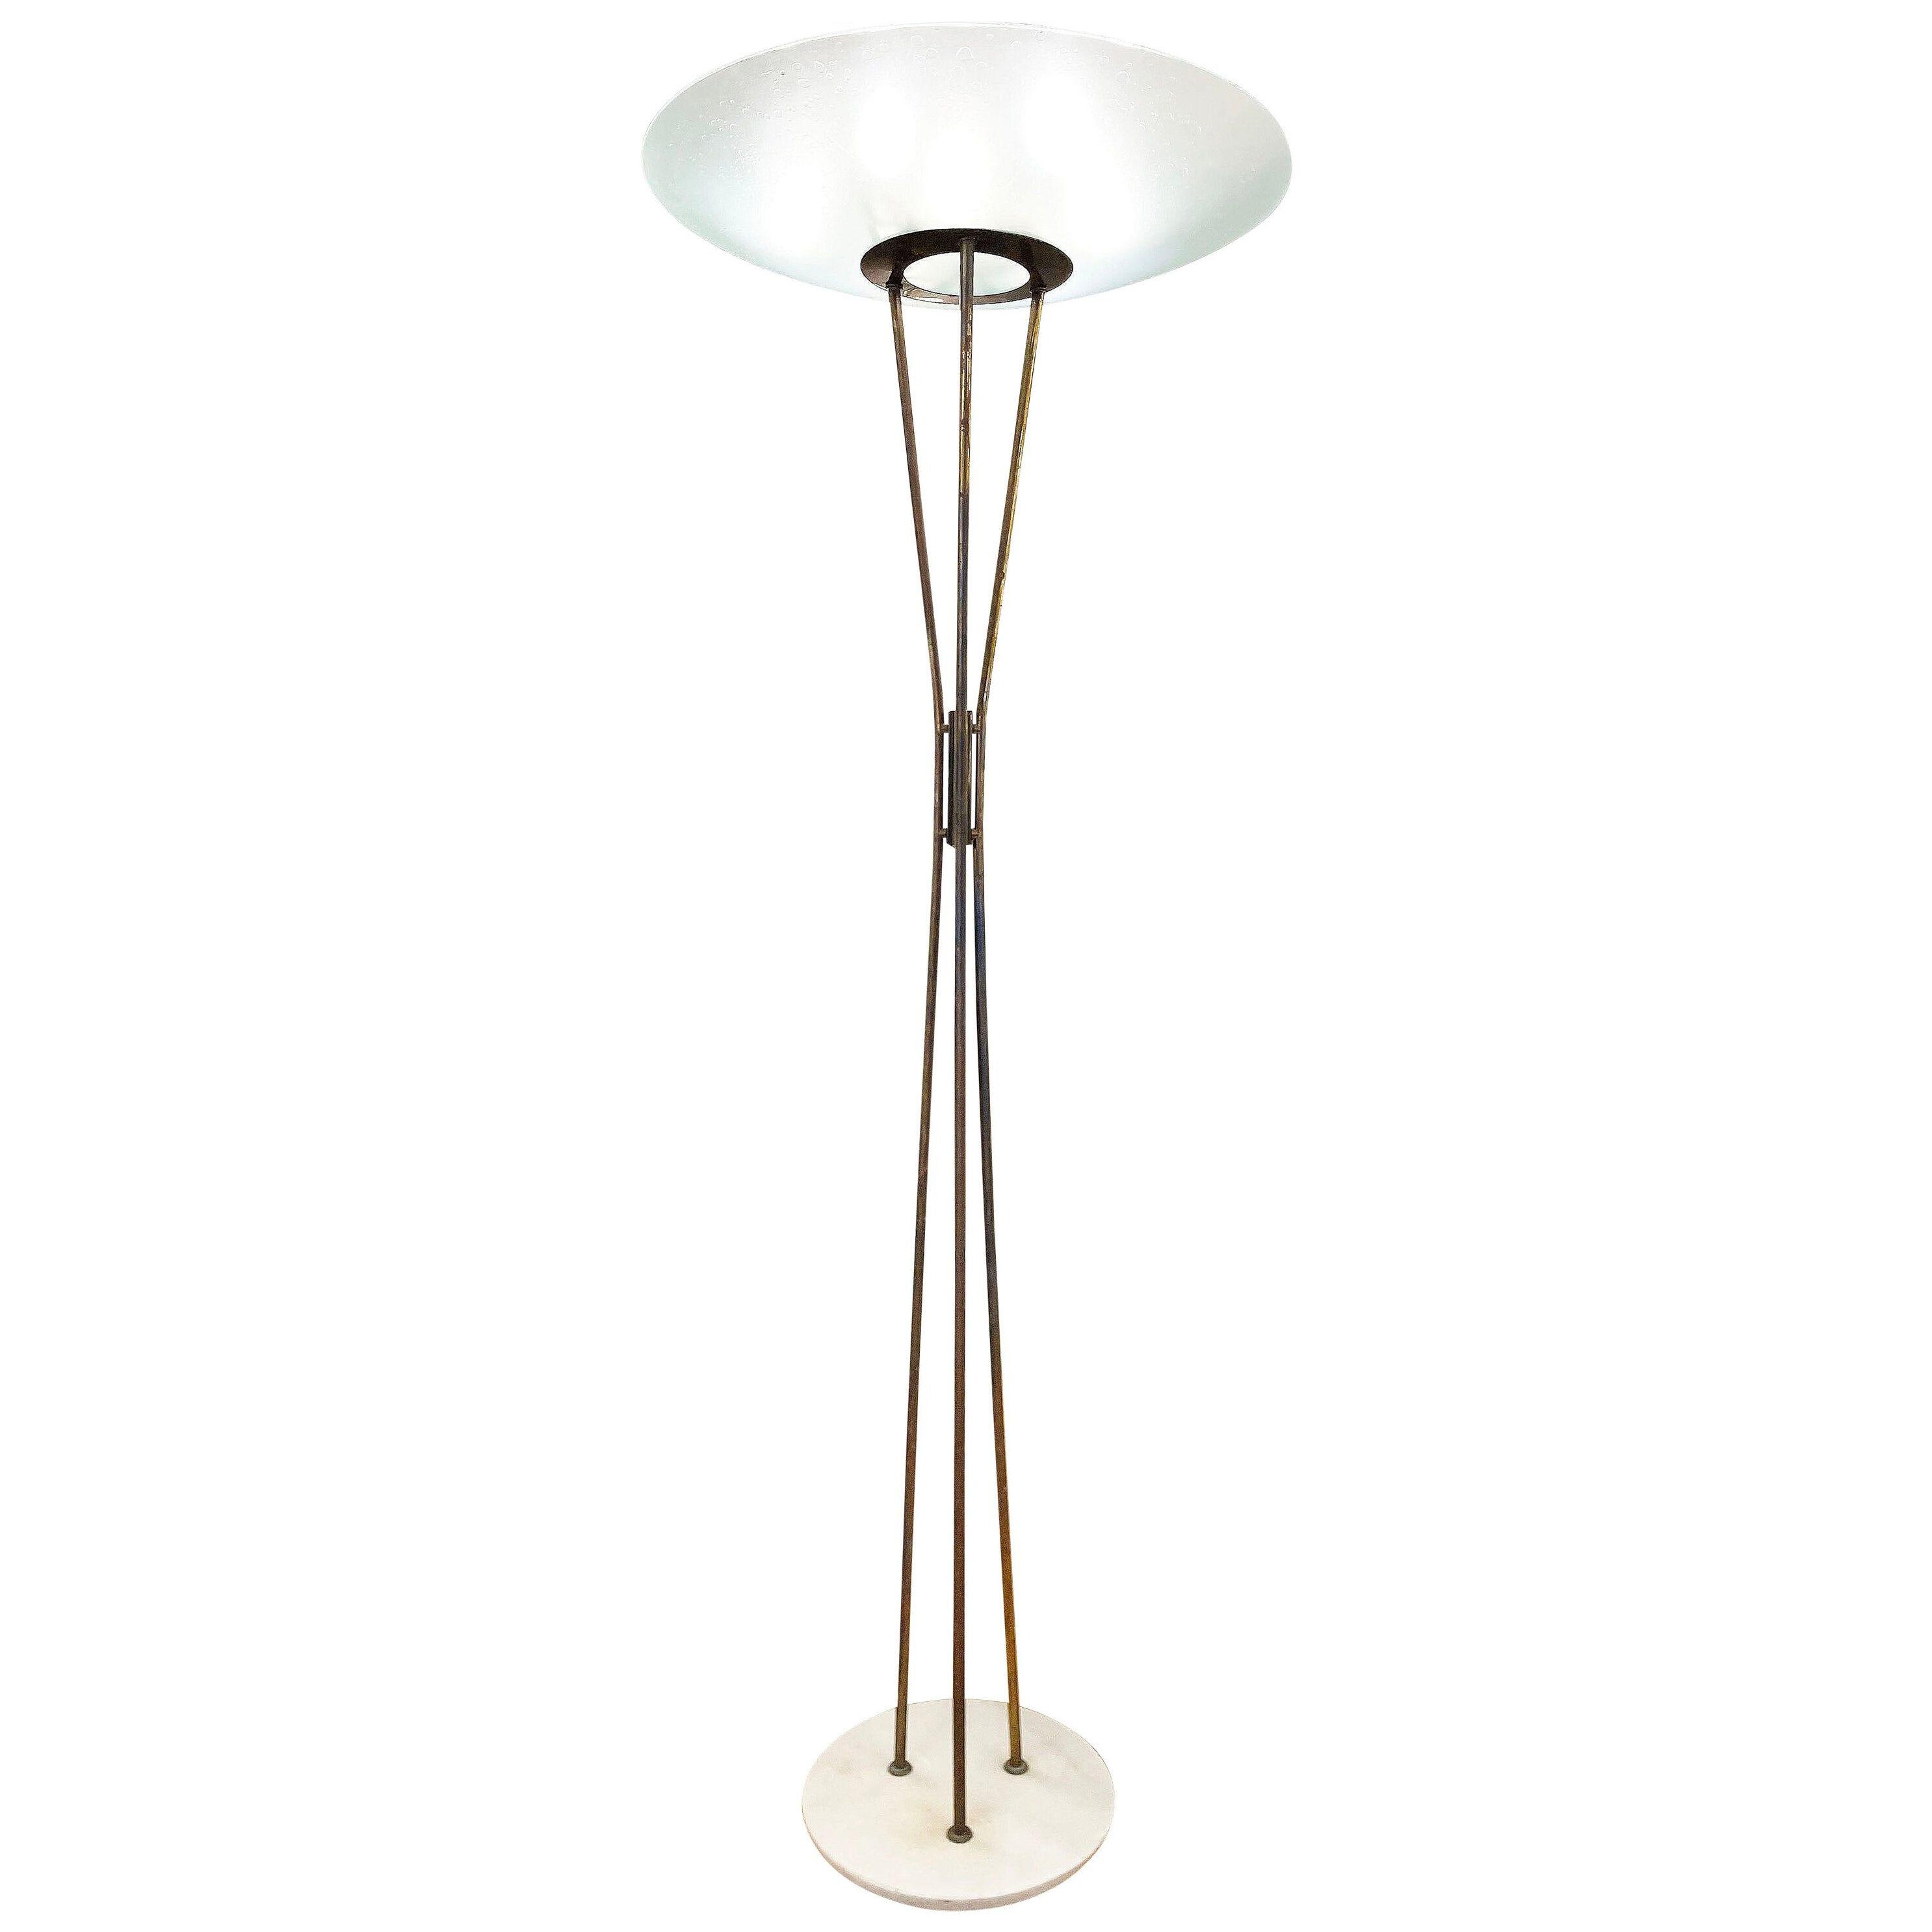 Rare Stilnovo Floor Lamp with Textured Glass, Marked